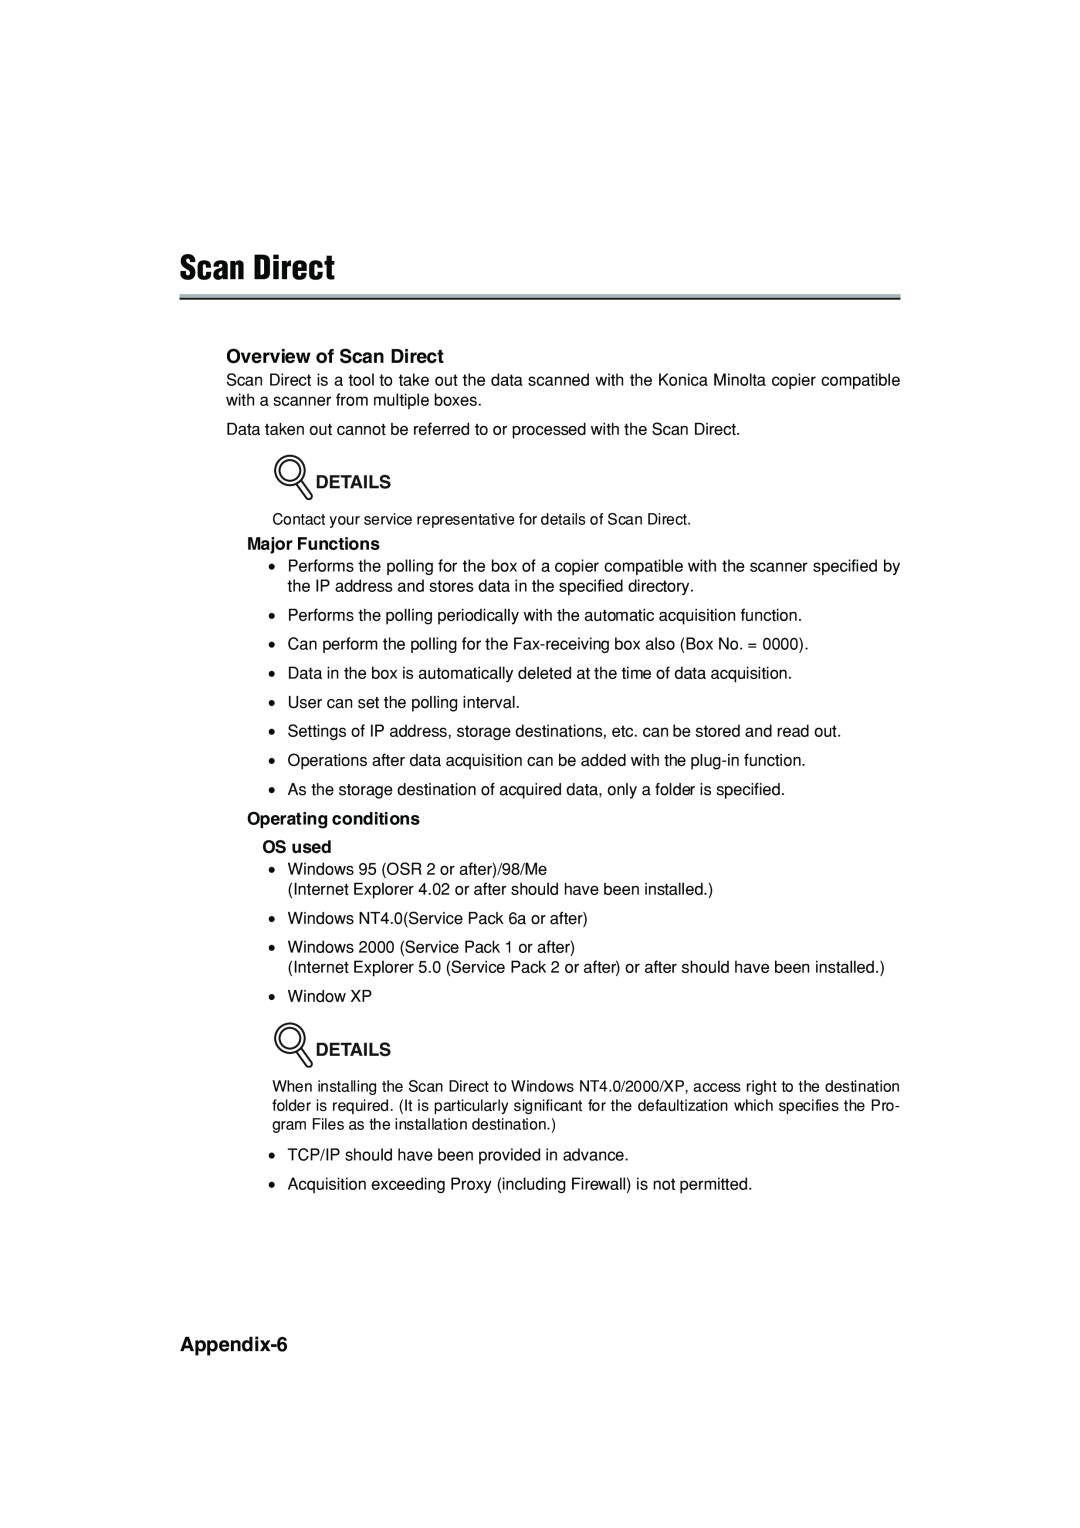 Konica Minolta 7222 manual Appendix-6, Overview of Scan Direct, Details 